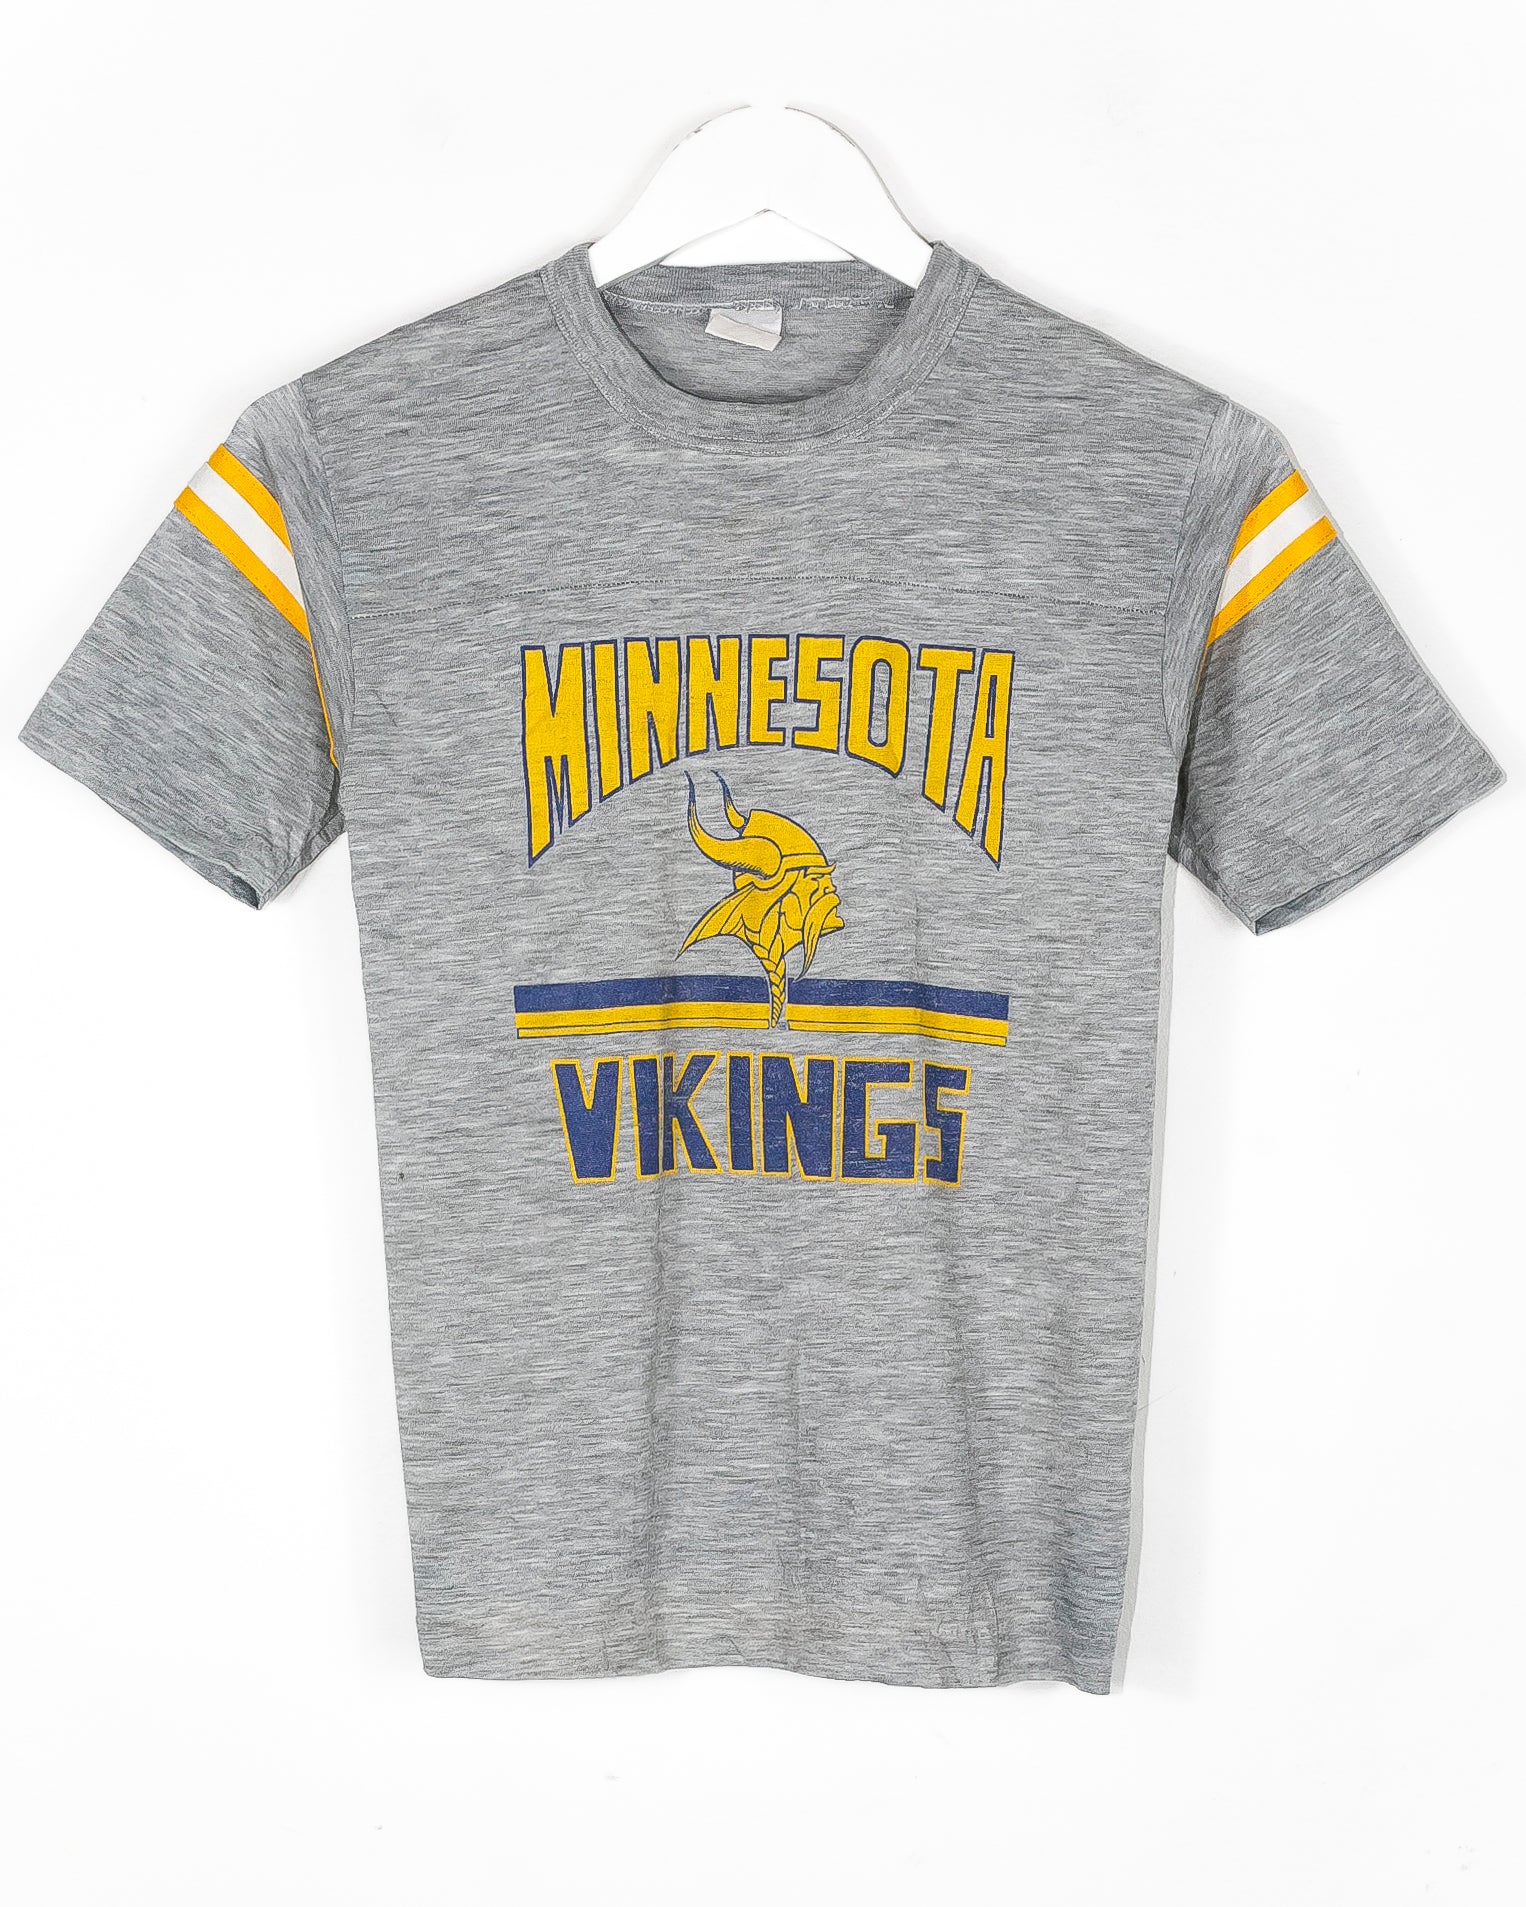 Vintage Minnesota Vikings T-Shirt (S/M)